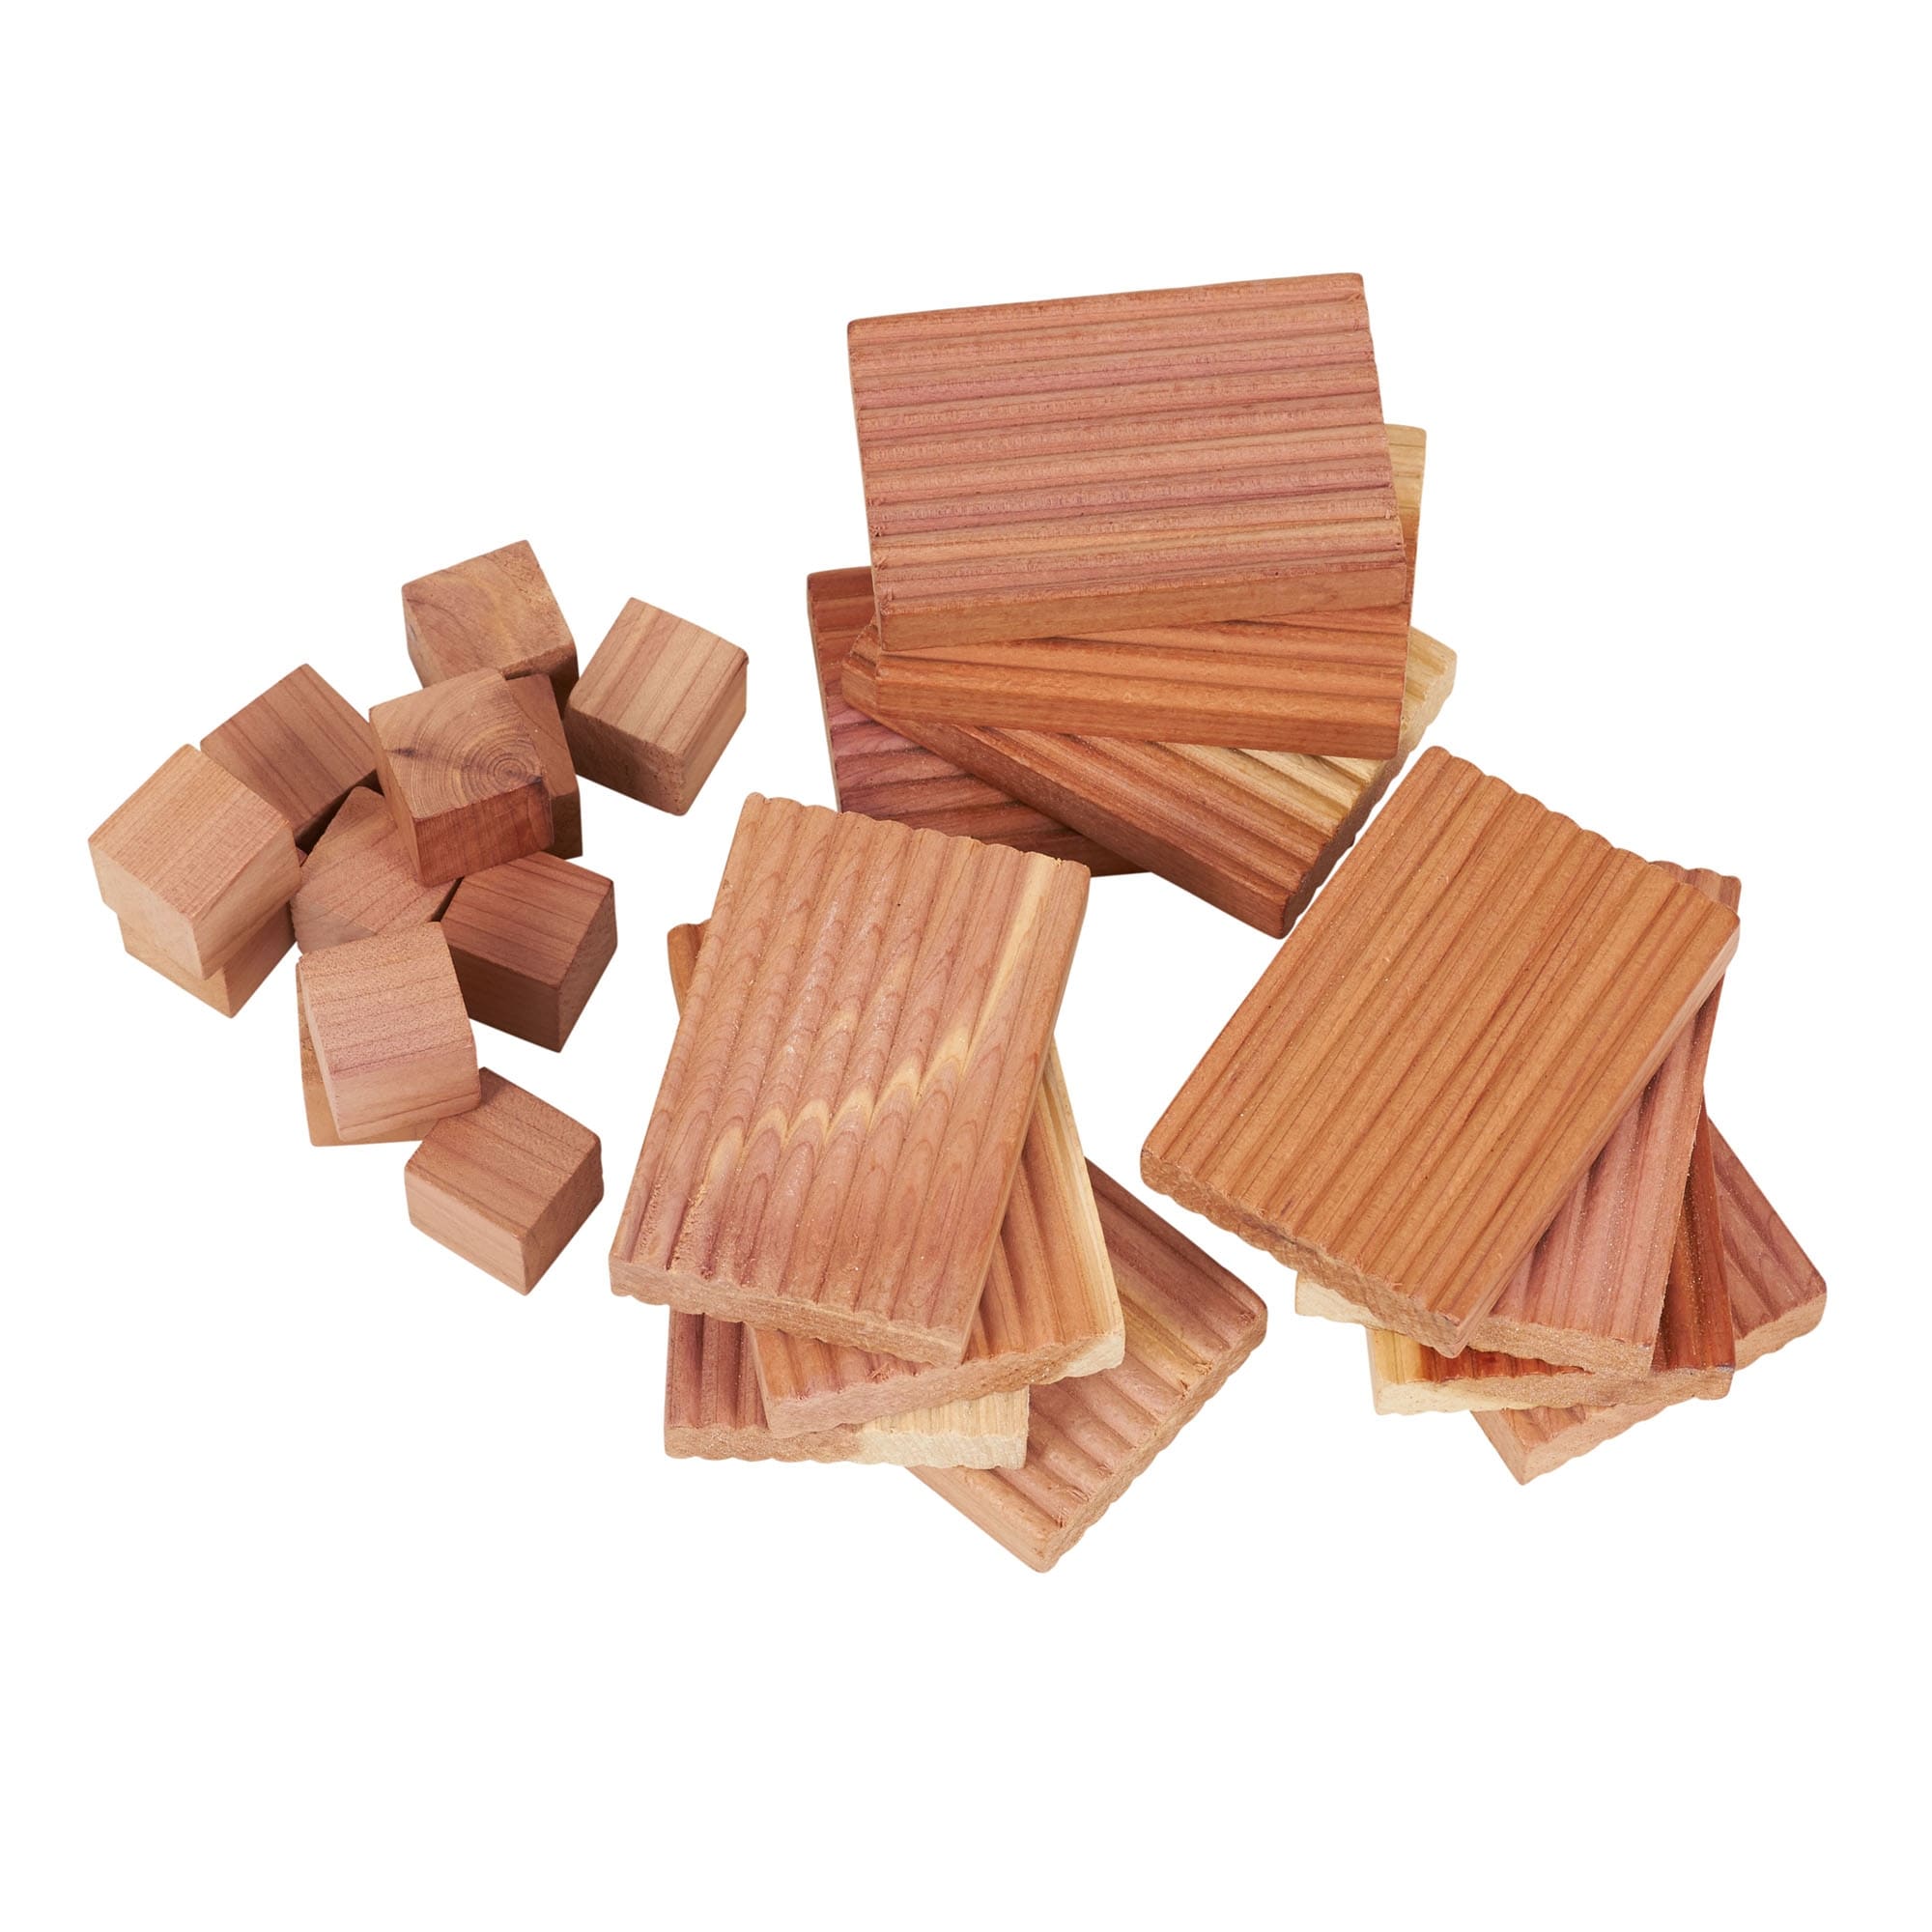 Household Essentials 12 Cedar Blocks and 12 Cubes, 24pc, Brown